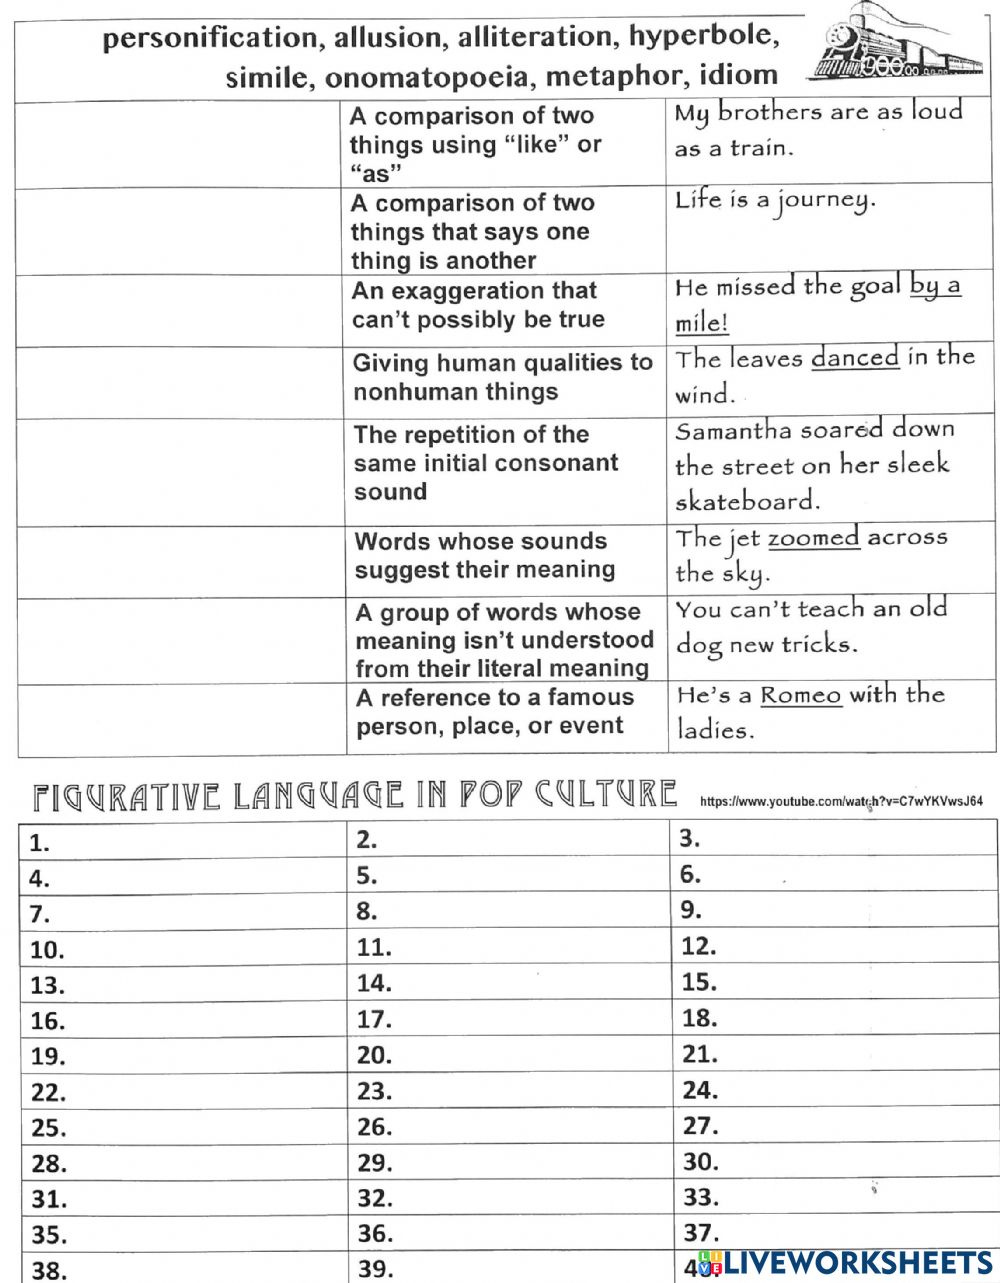 Identifying Figurative Language In Pop Culture Worksheet